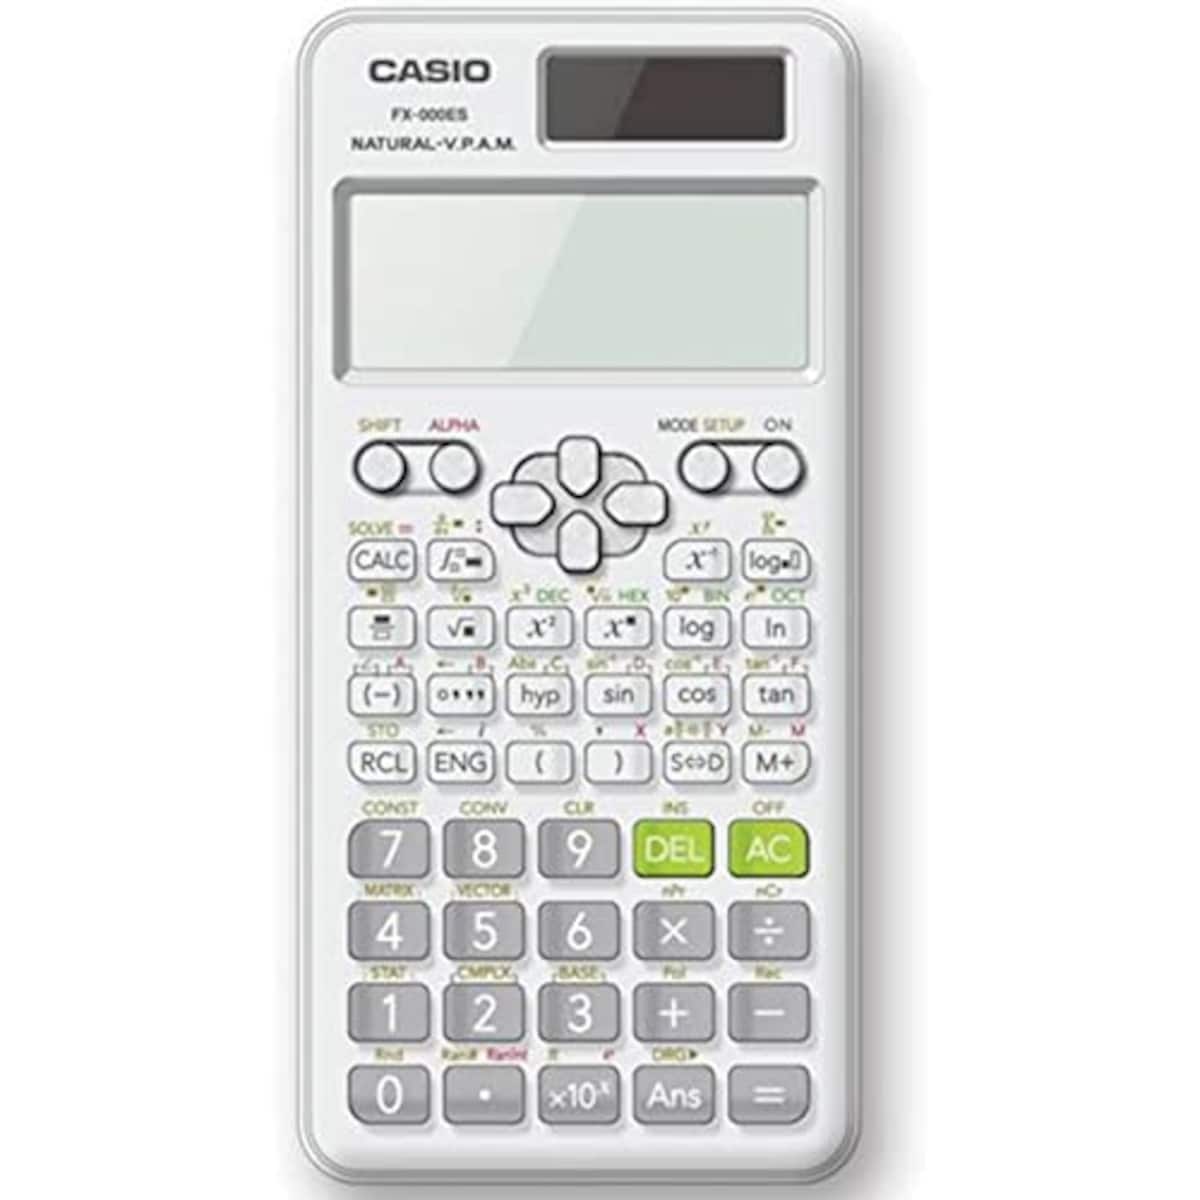 White Advanced Scientific Calculator with Natural Display